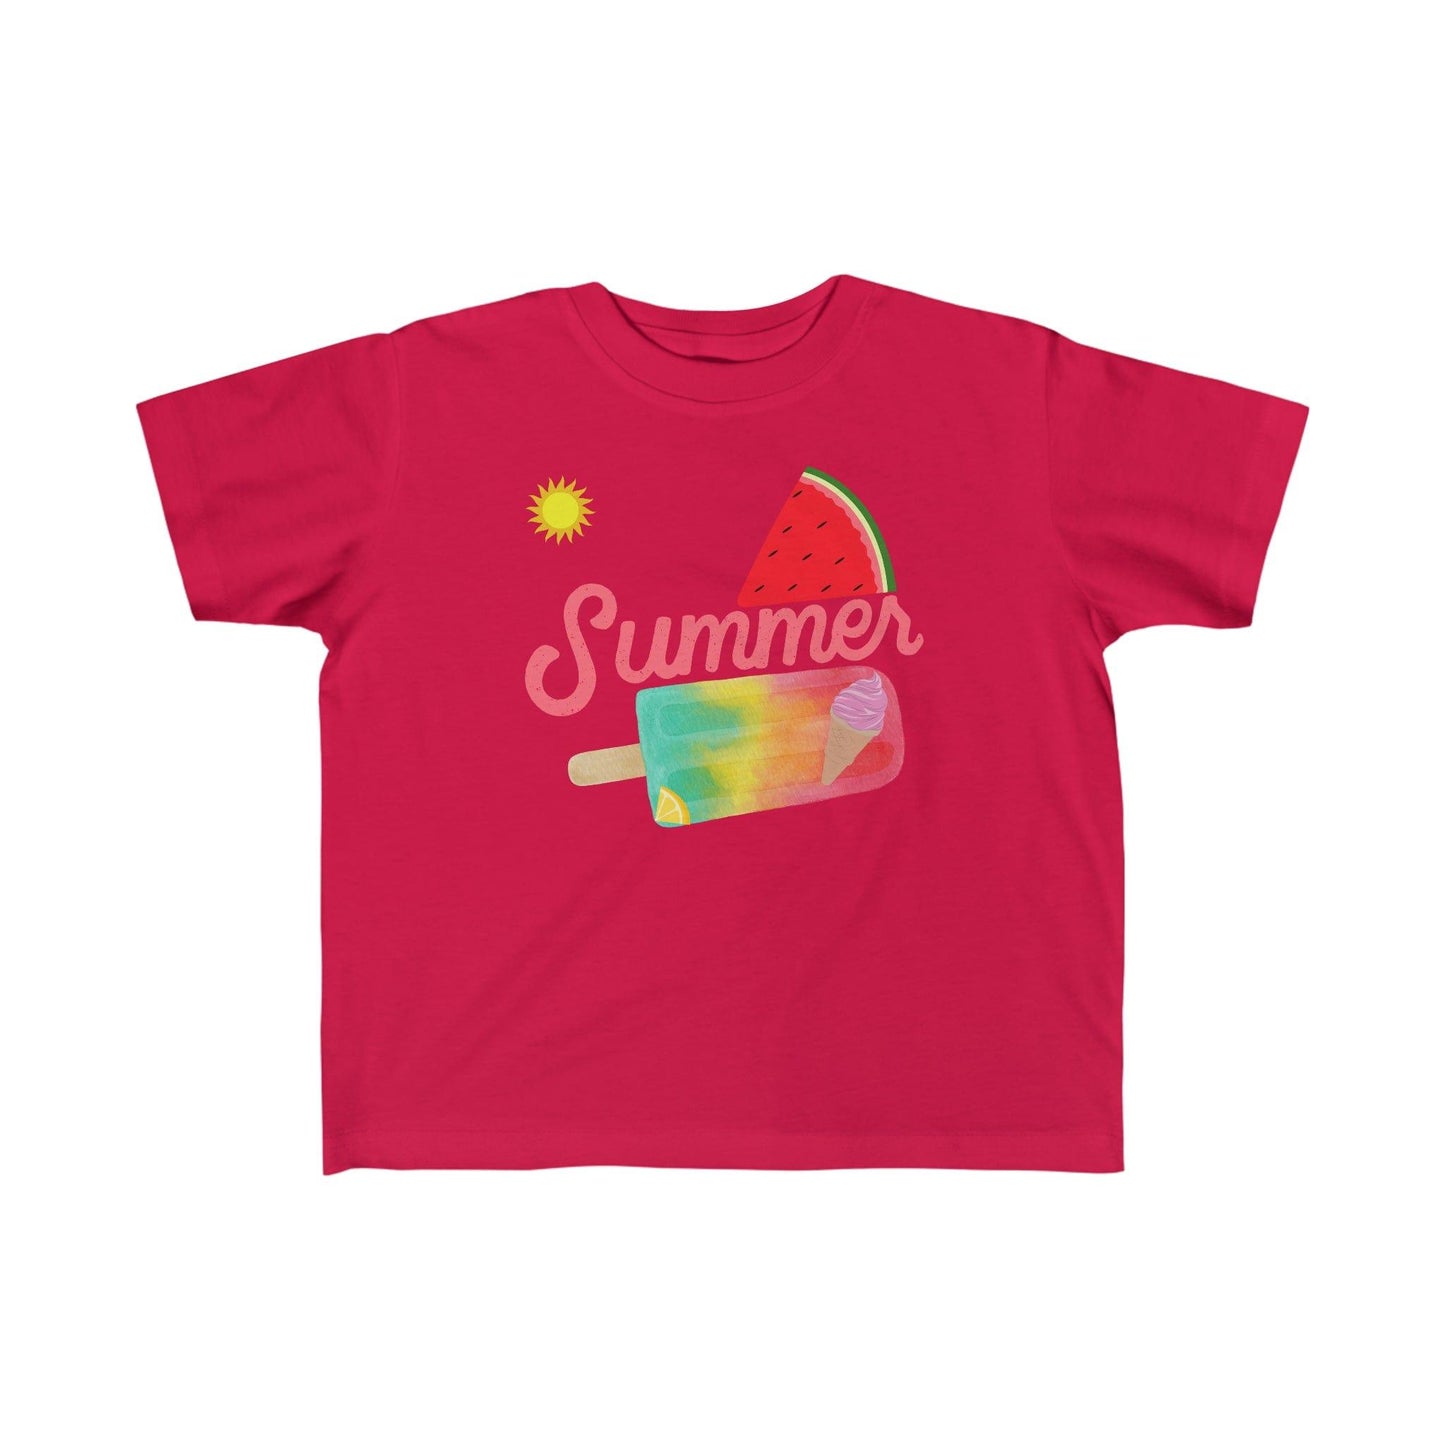 Toddler's Summer Tee, Summer Shirt for Toddlers Birthday gift Kids Tshirt